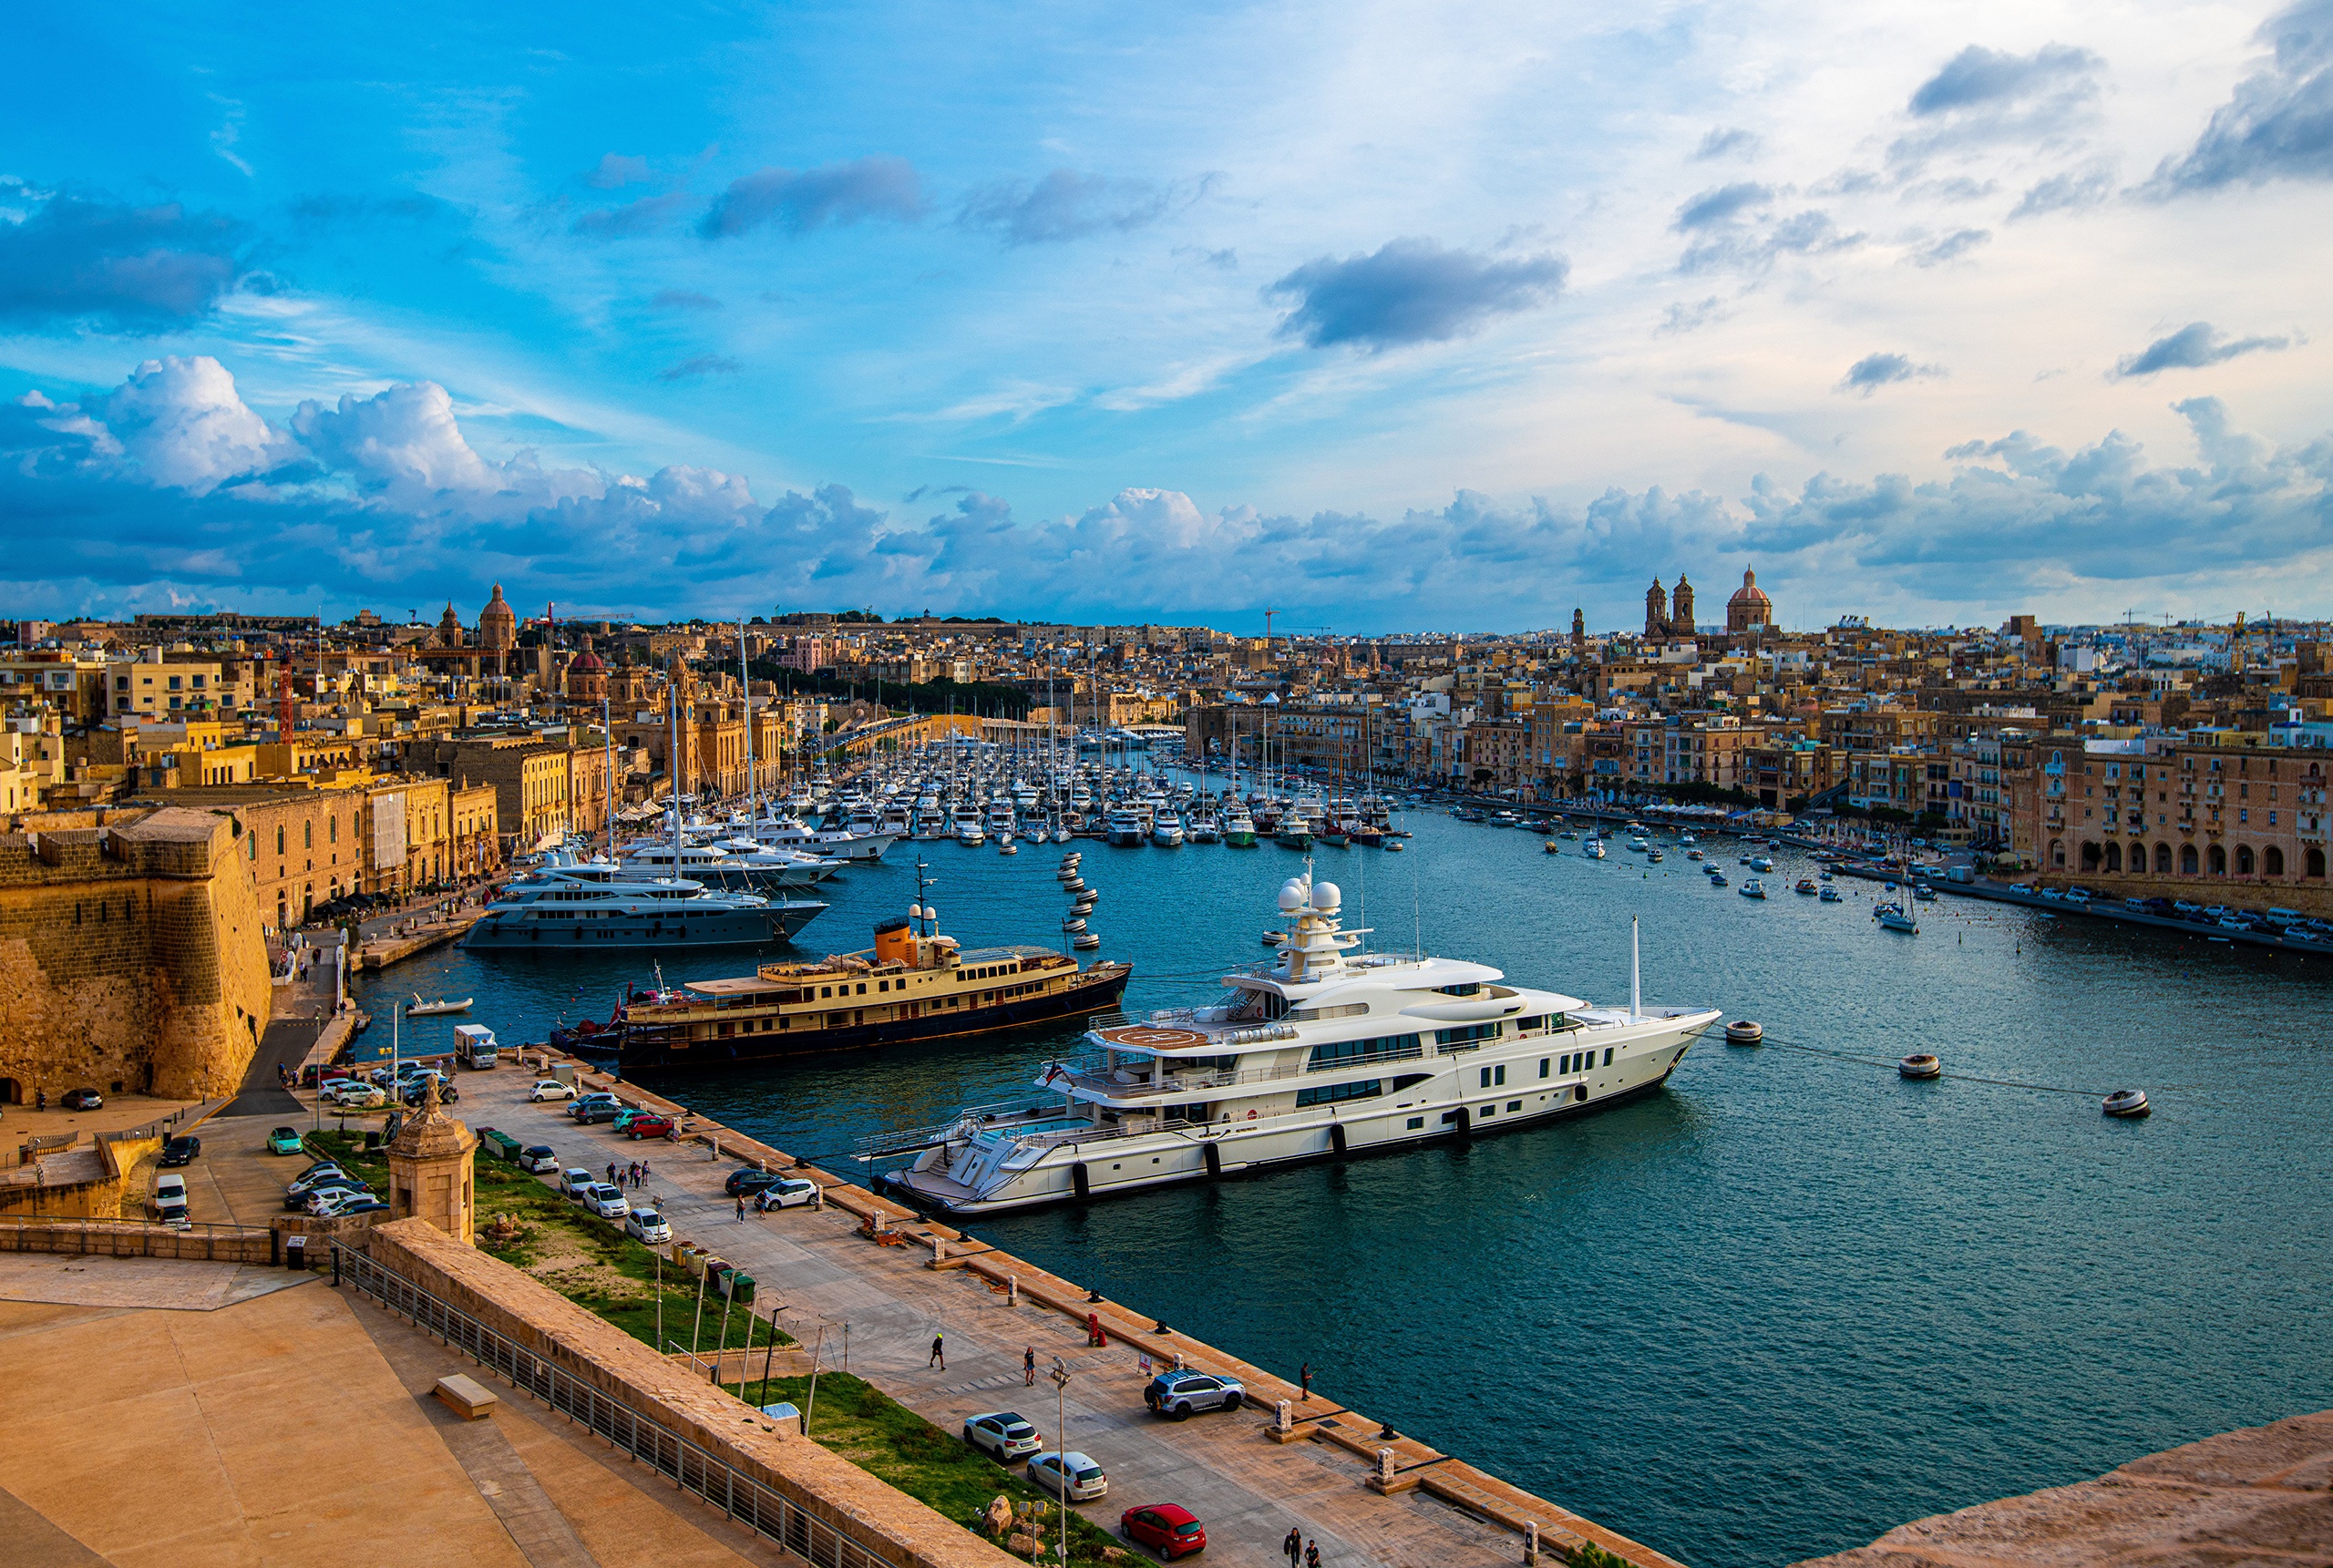 Cual es la capital de malta